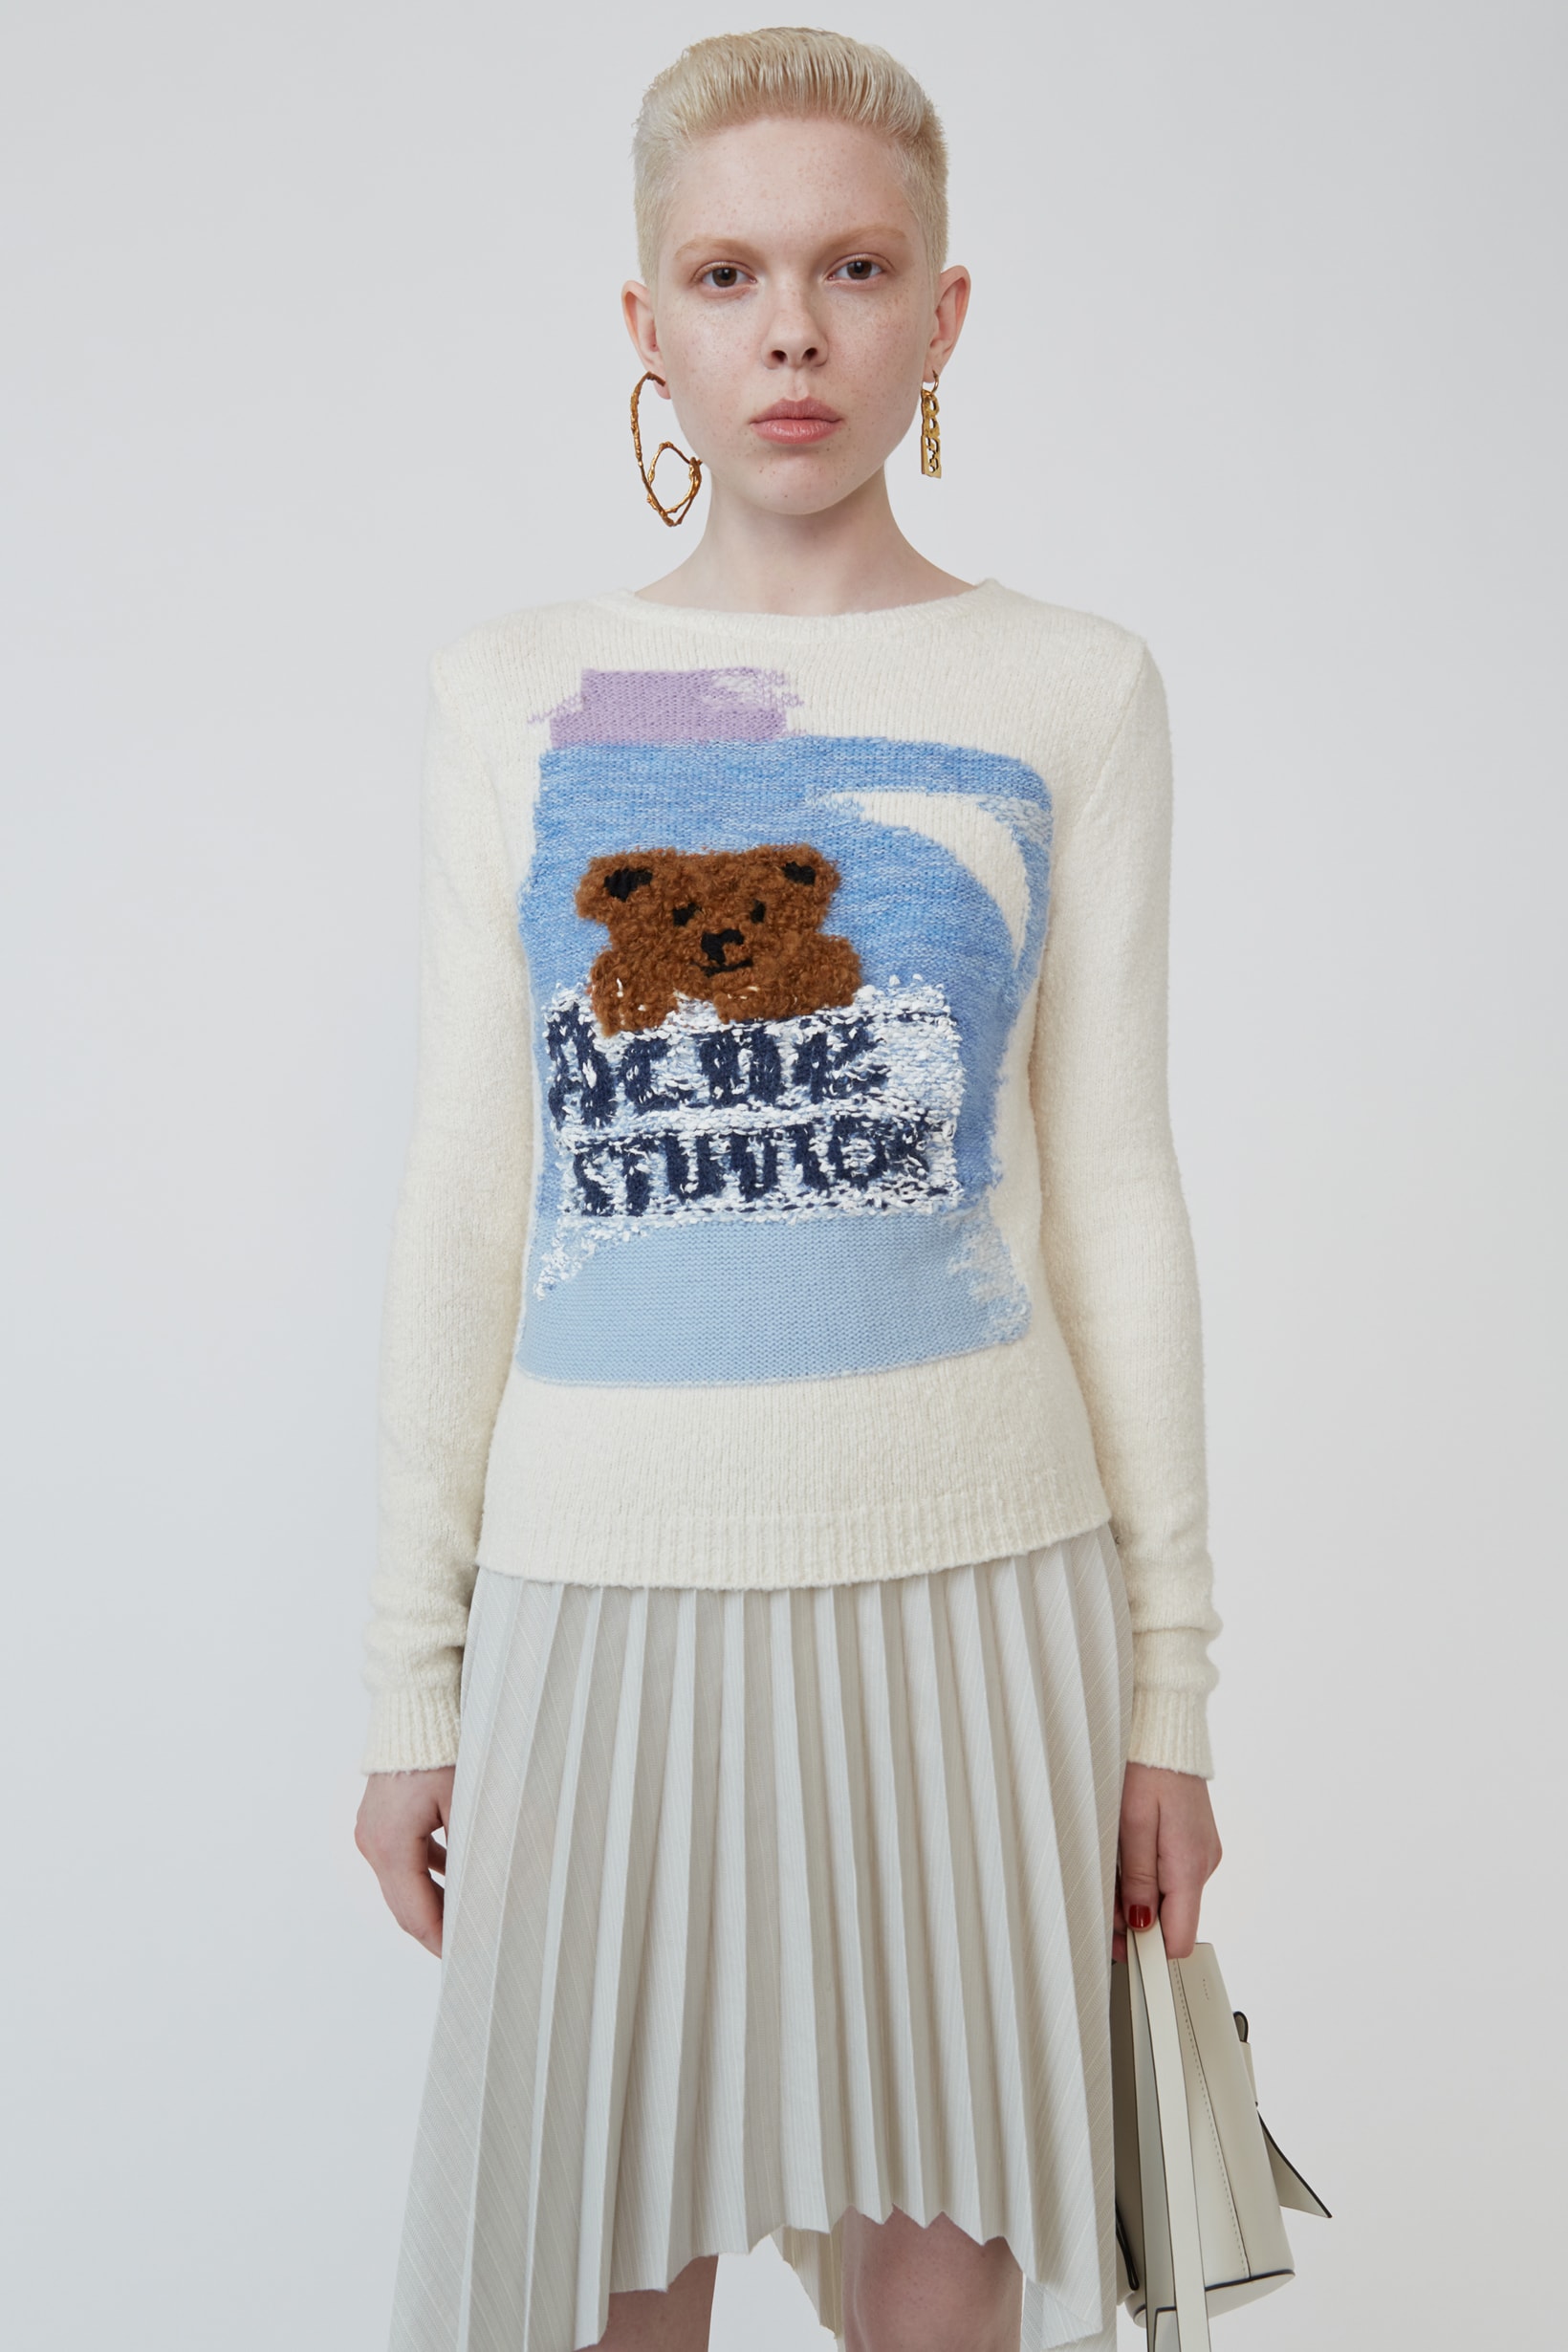 Grant Levy Lucero x Acne Studios Collection Sweater Cream